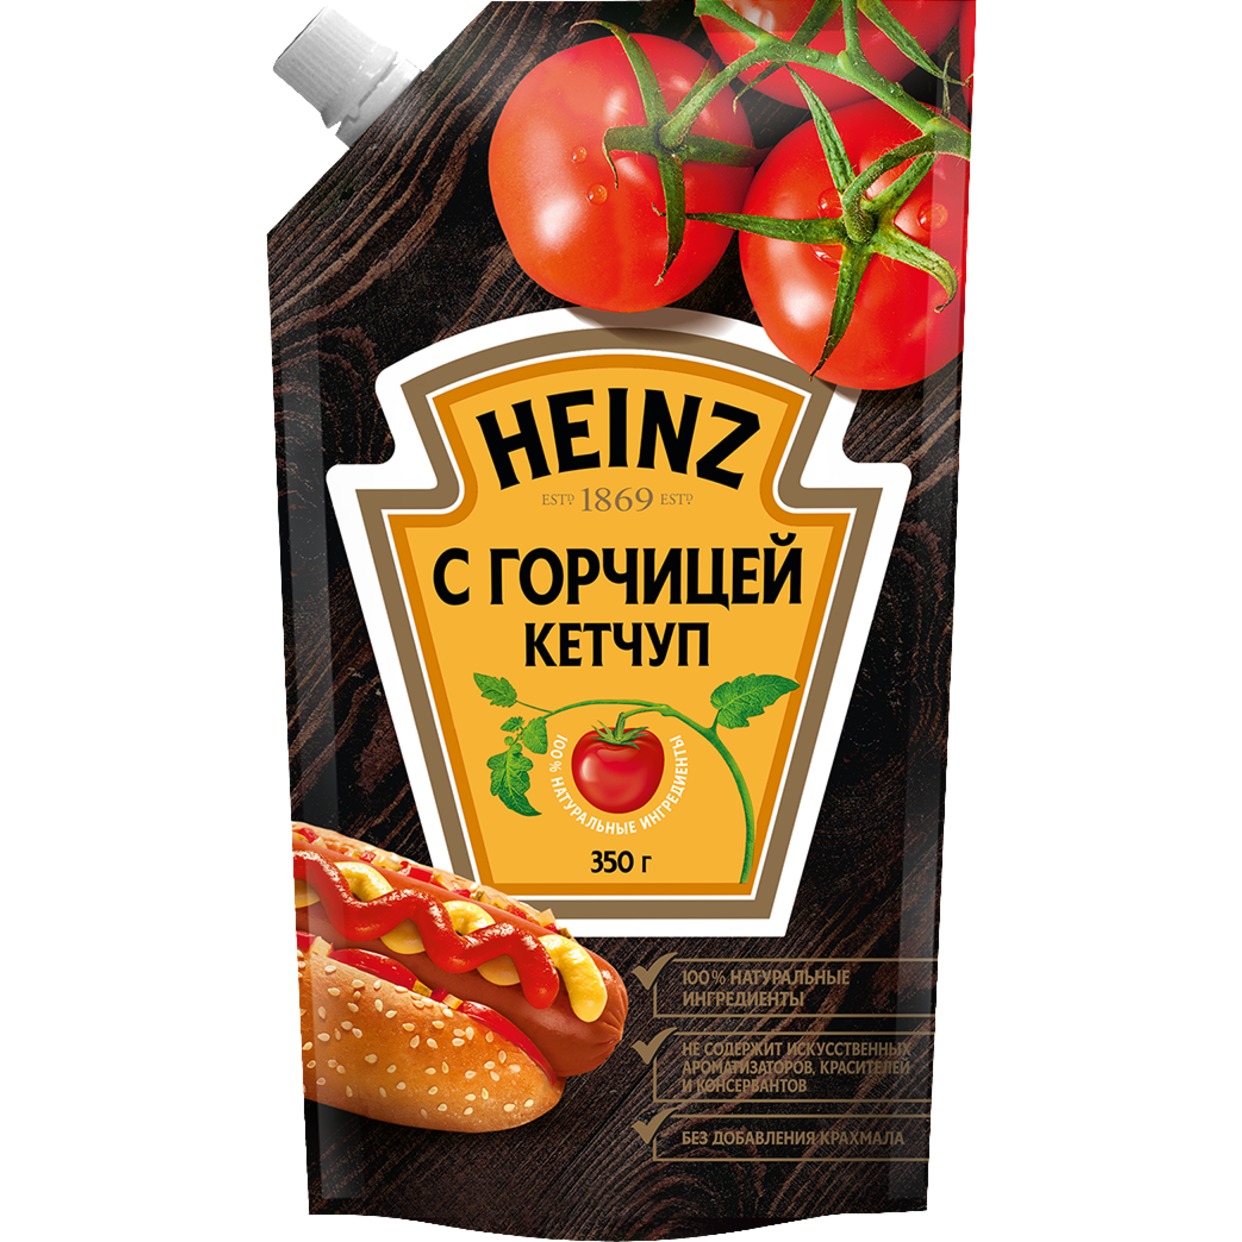 HEINZ Кетчуп томат.с горч.1кат.350г по акции в Пятерочке